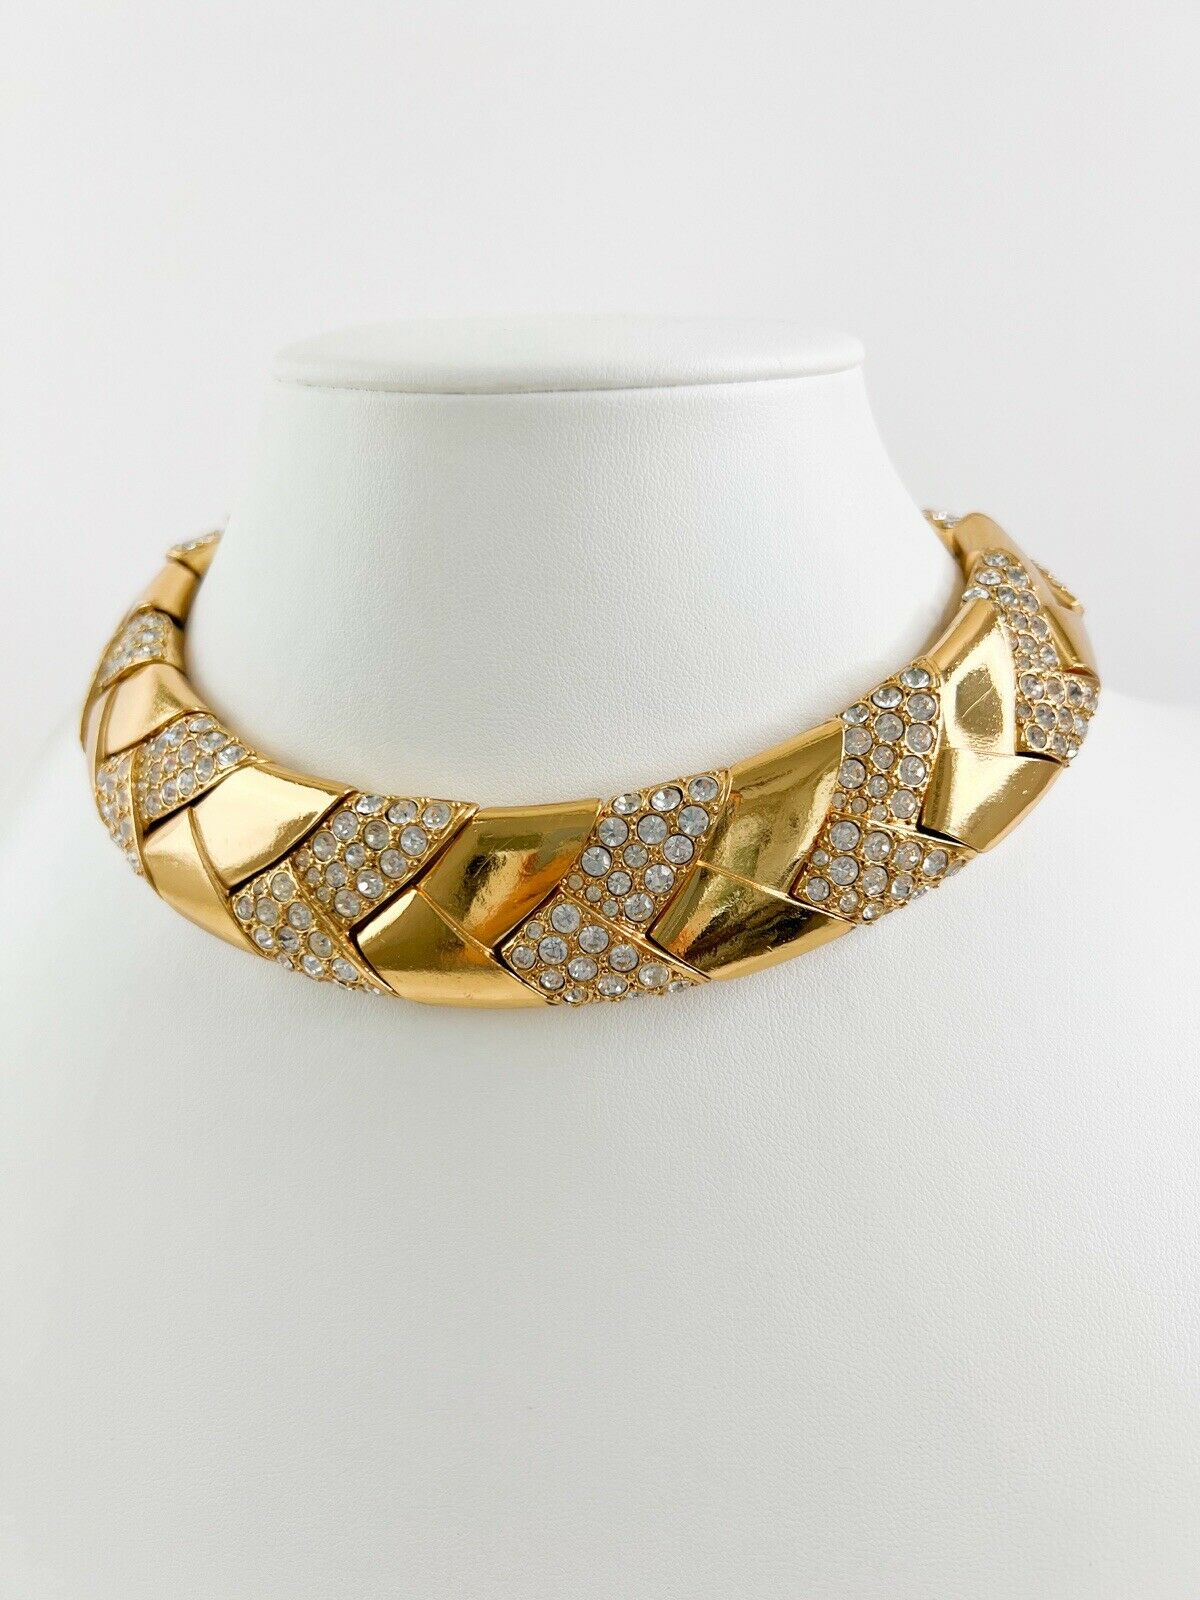 YSL Yves Saint Laurent Made in France Vintage Necklace Choker Gold Rhinestones